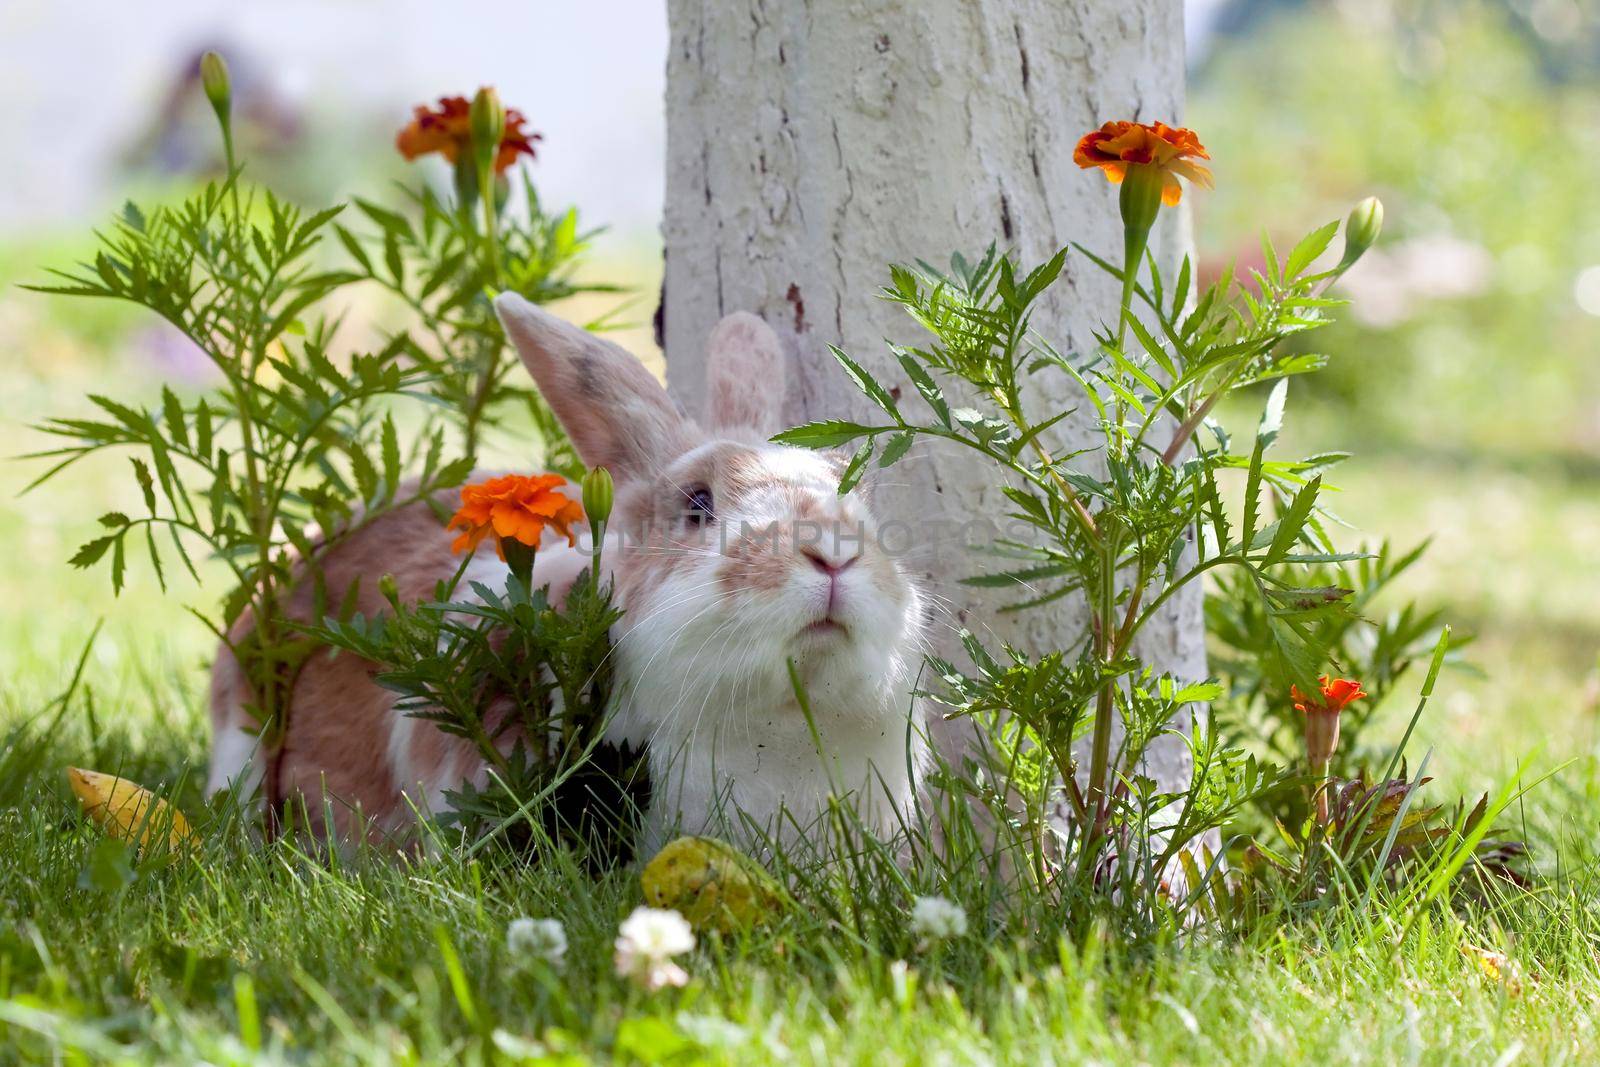 Rabbit between flowers by Lincikas